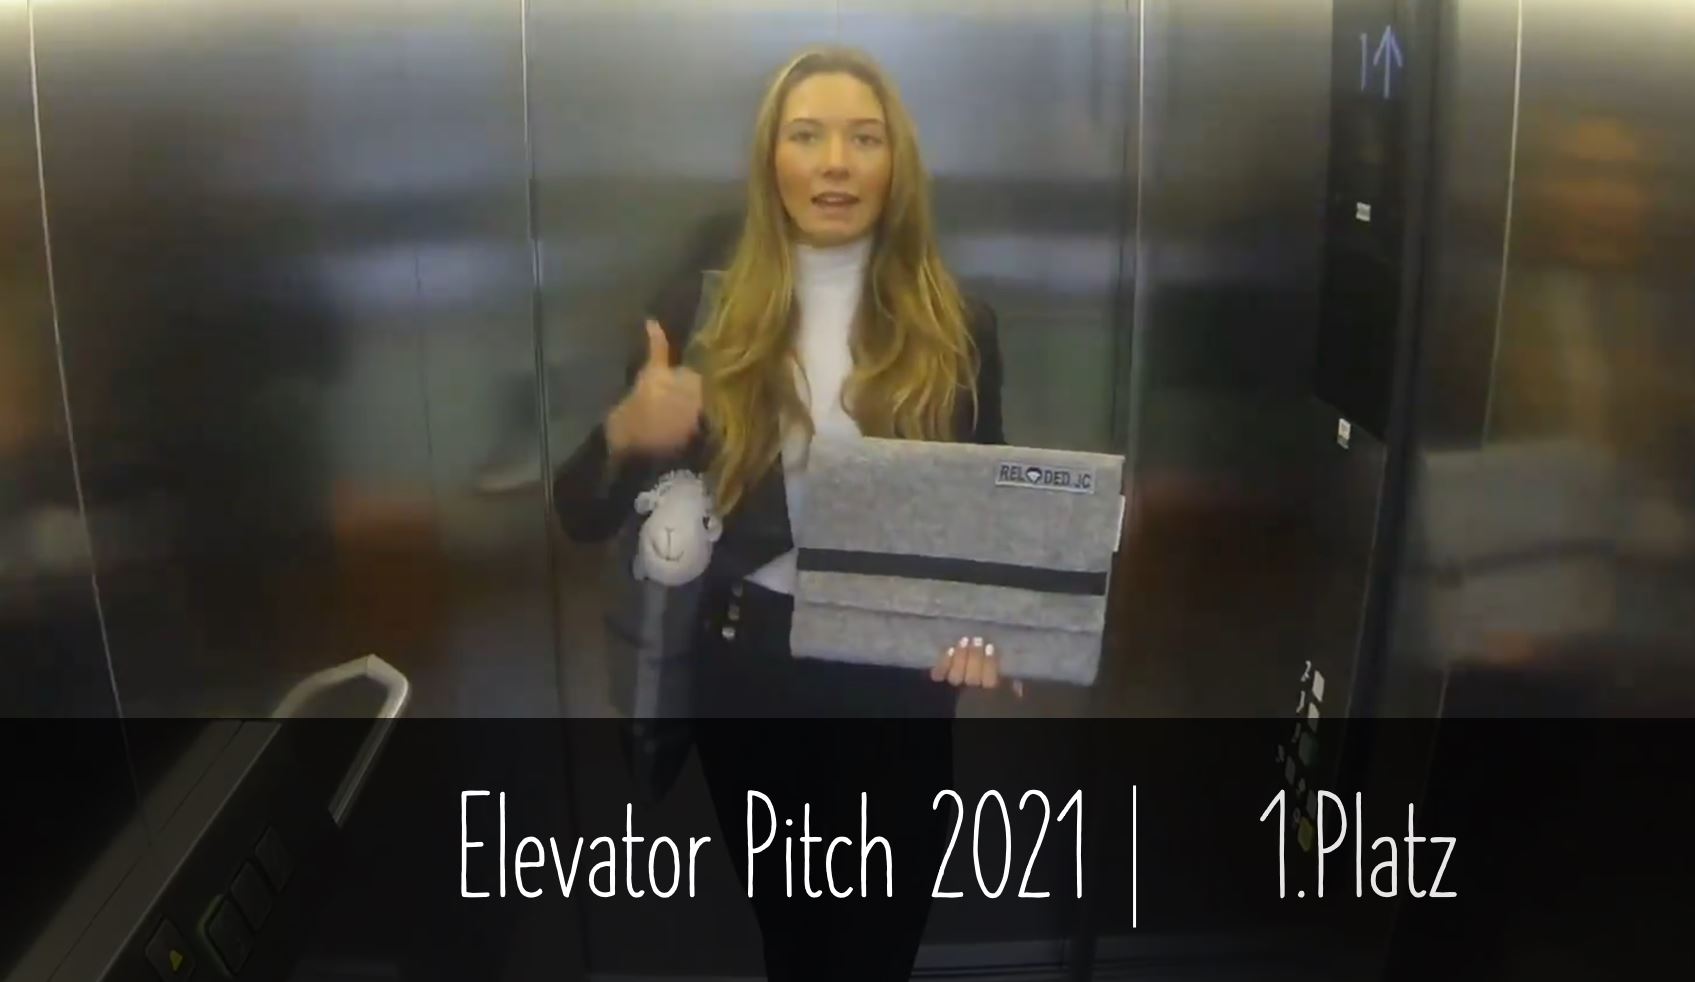 Sieg Elevator Pitch Reloded